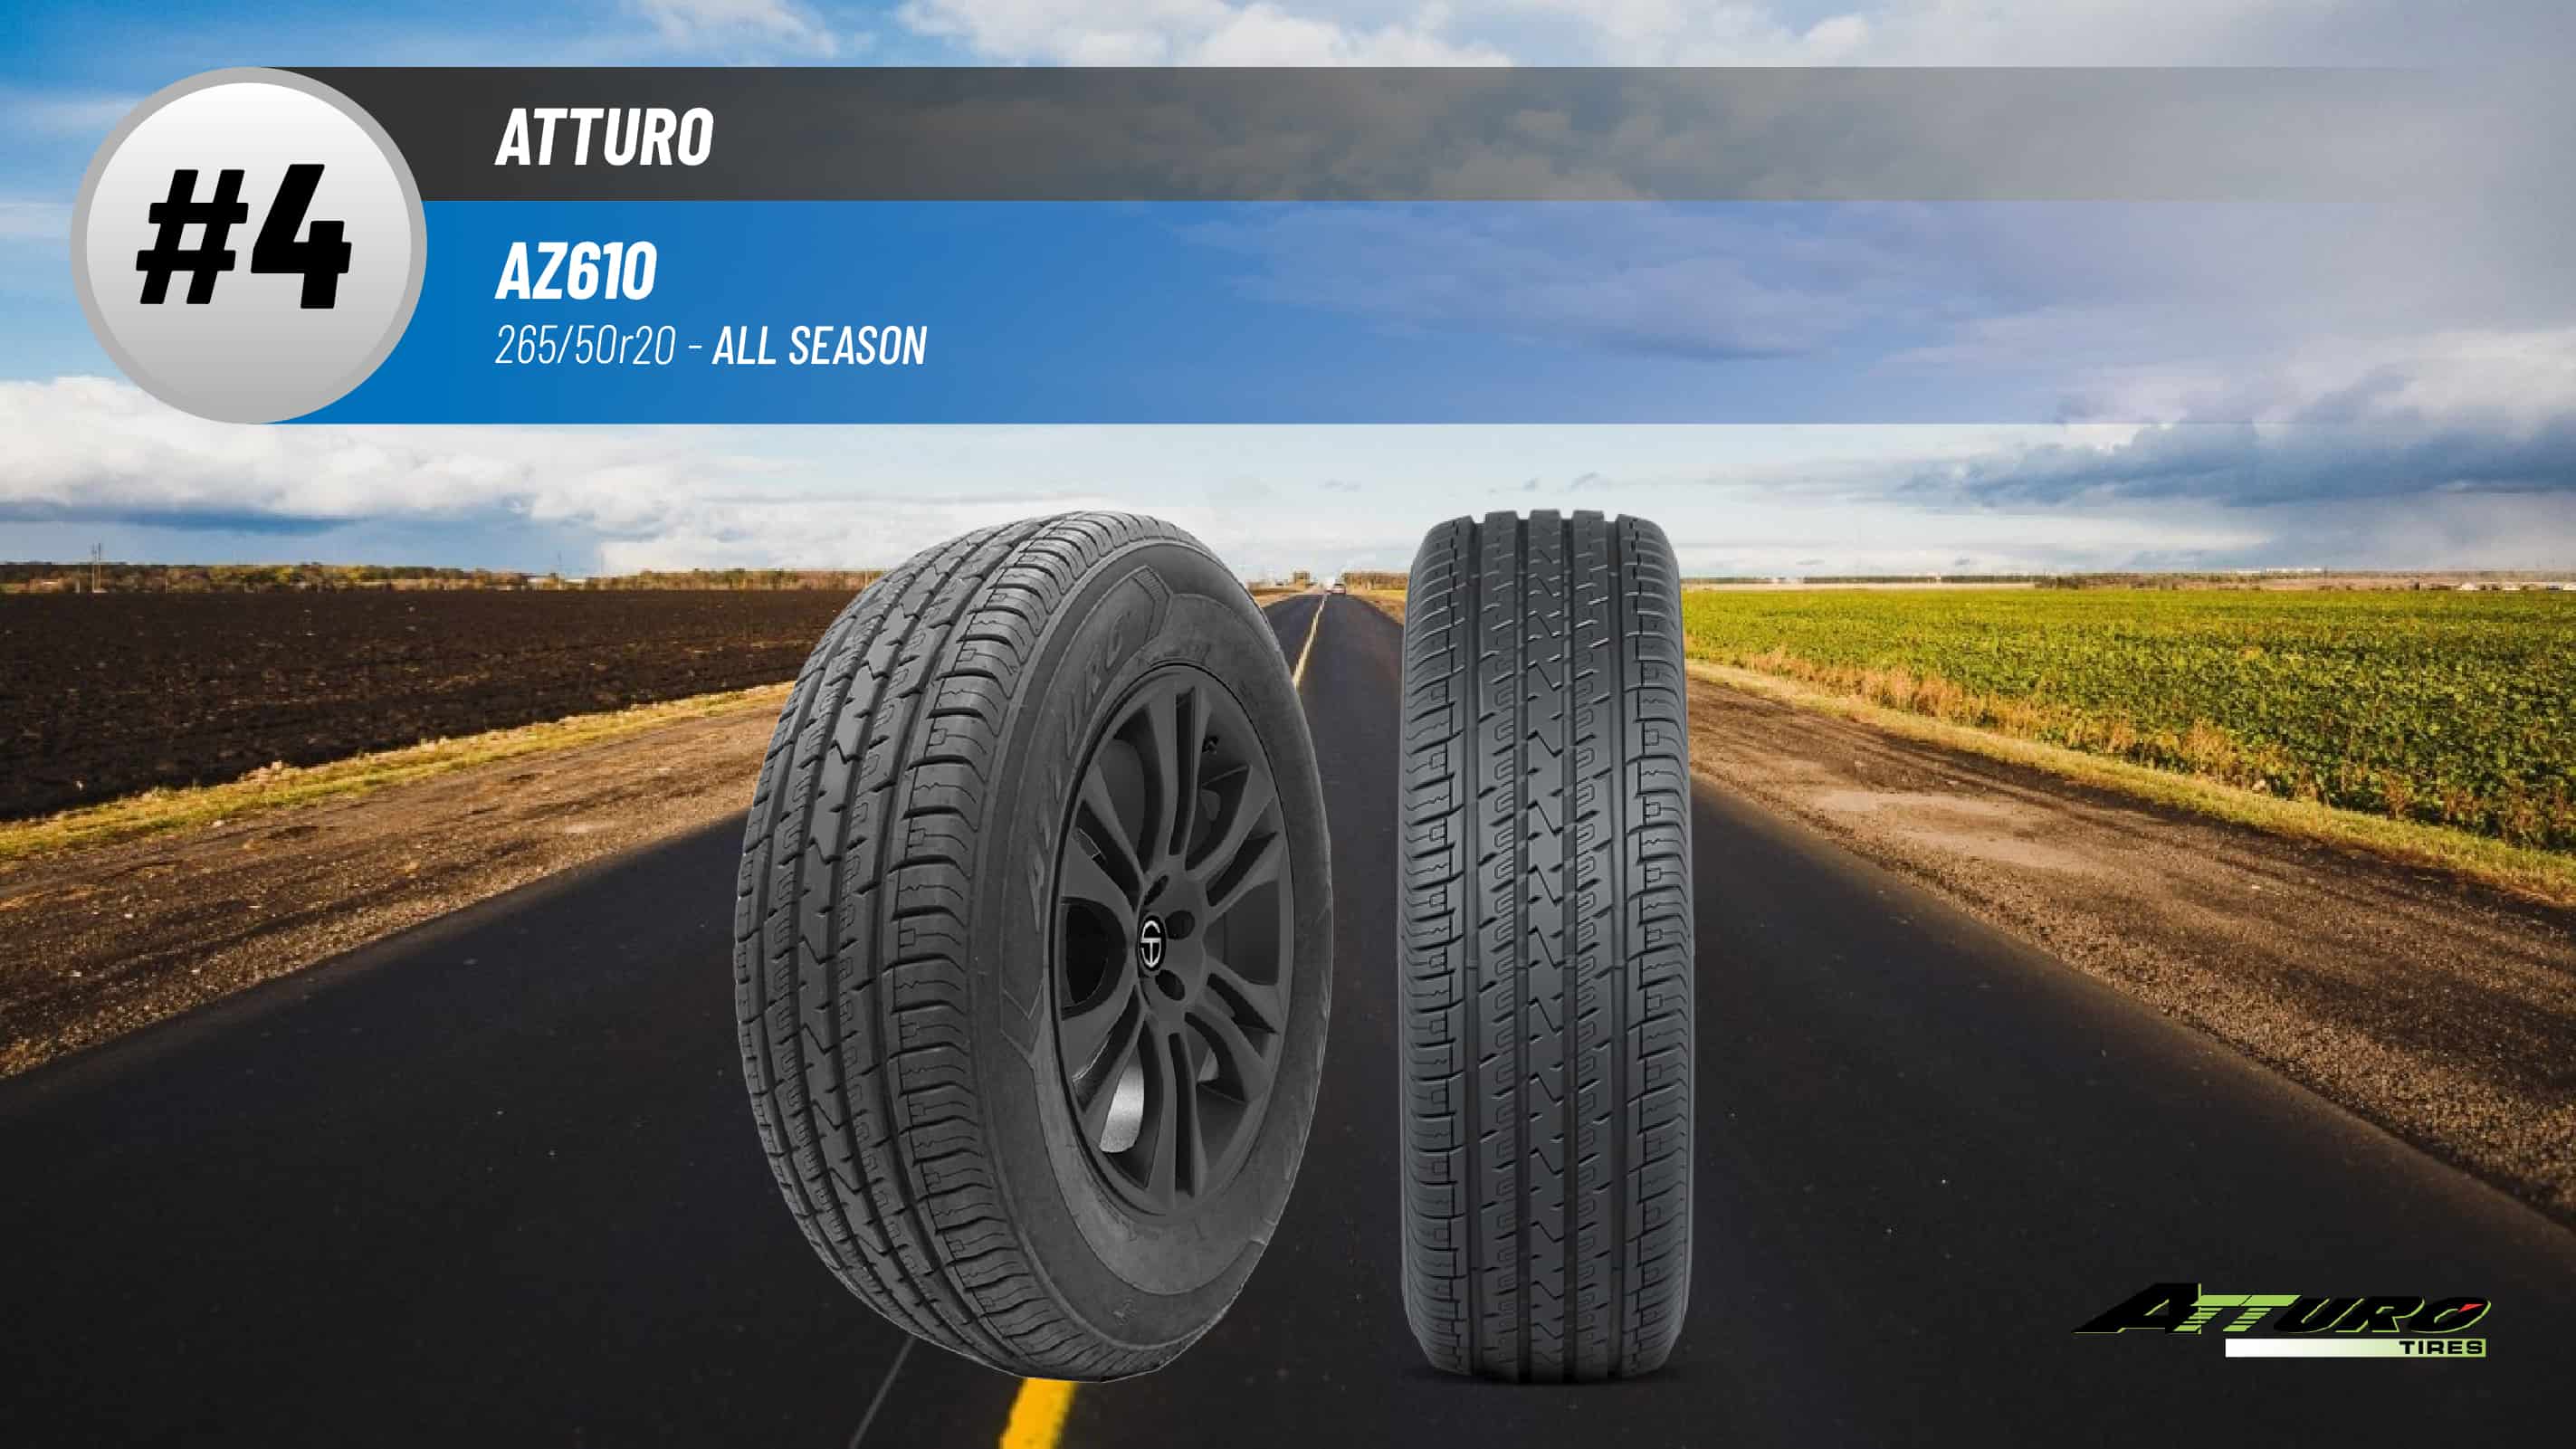 Top #4 All Season Tires: Atturo AZ610 – best 265/50r20